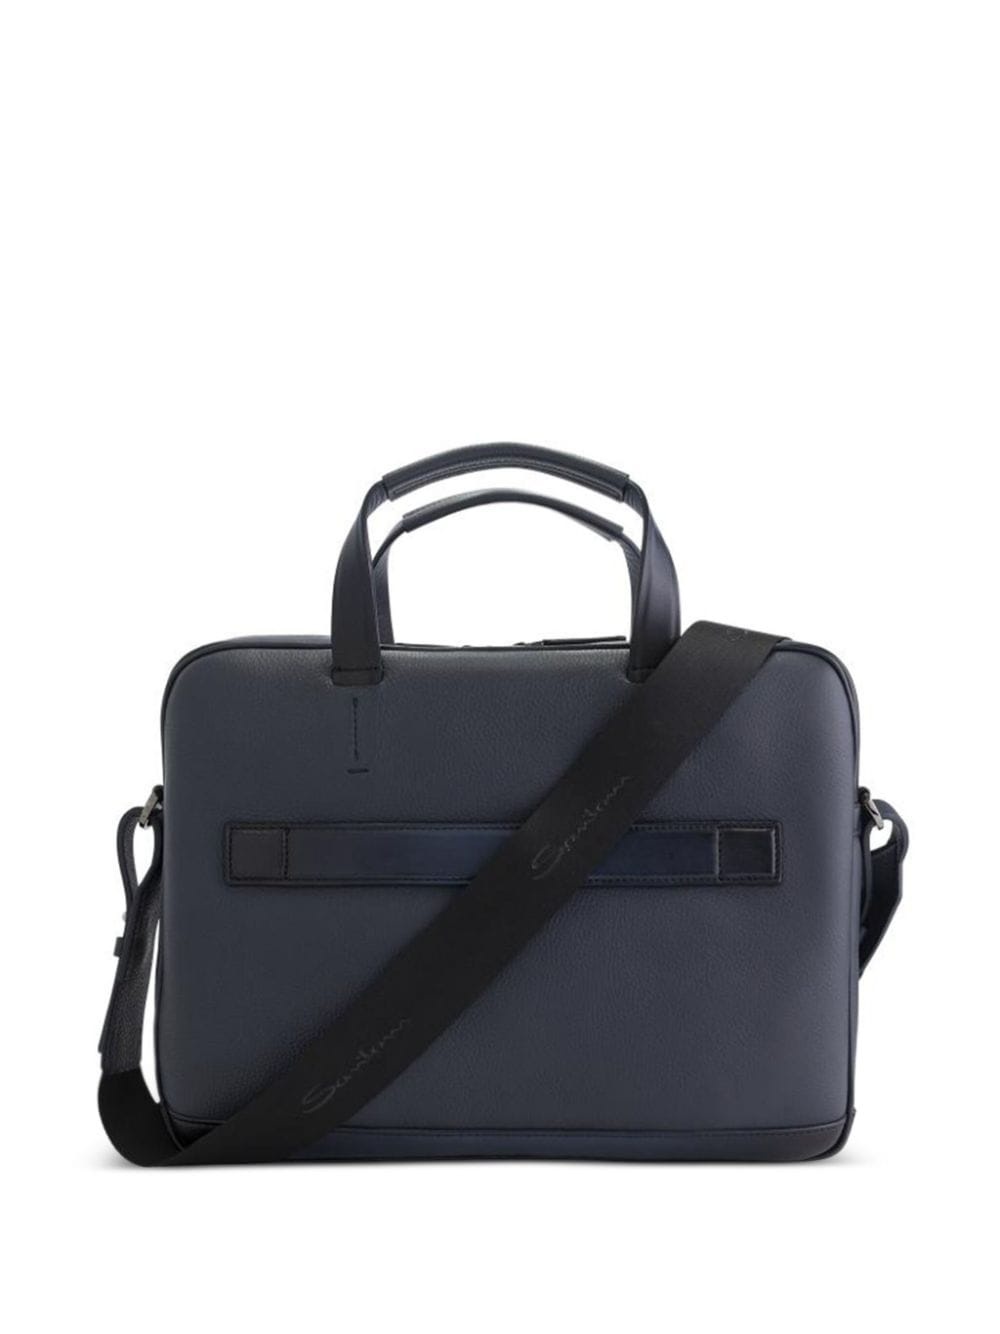 leather laptop bag - 2